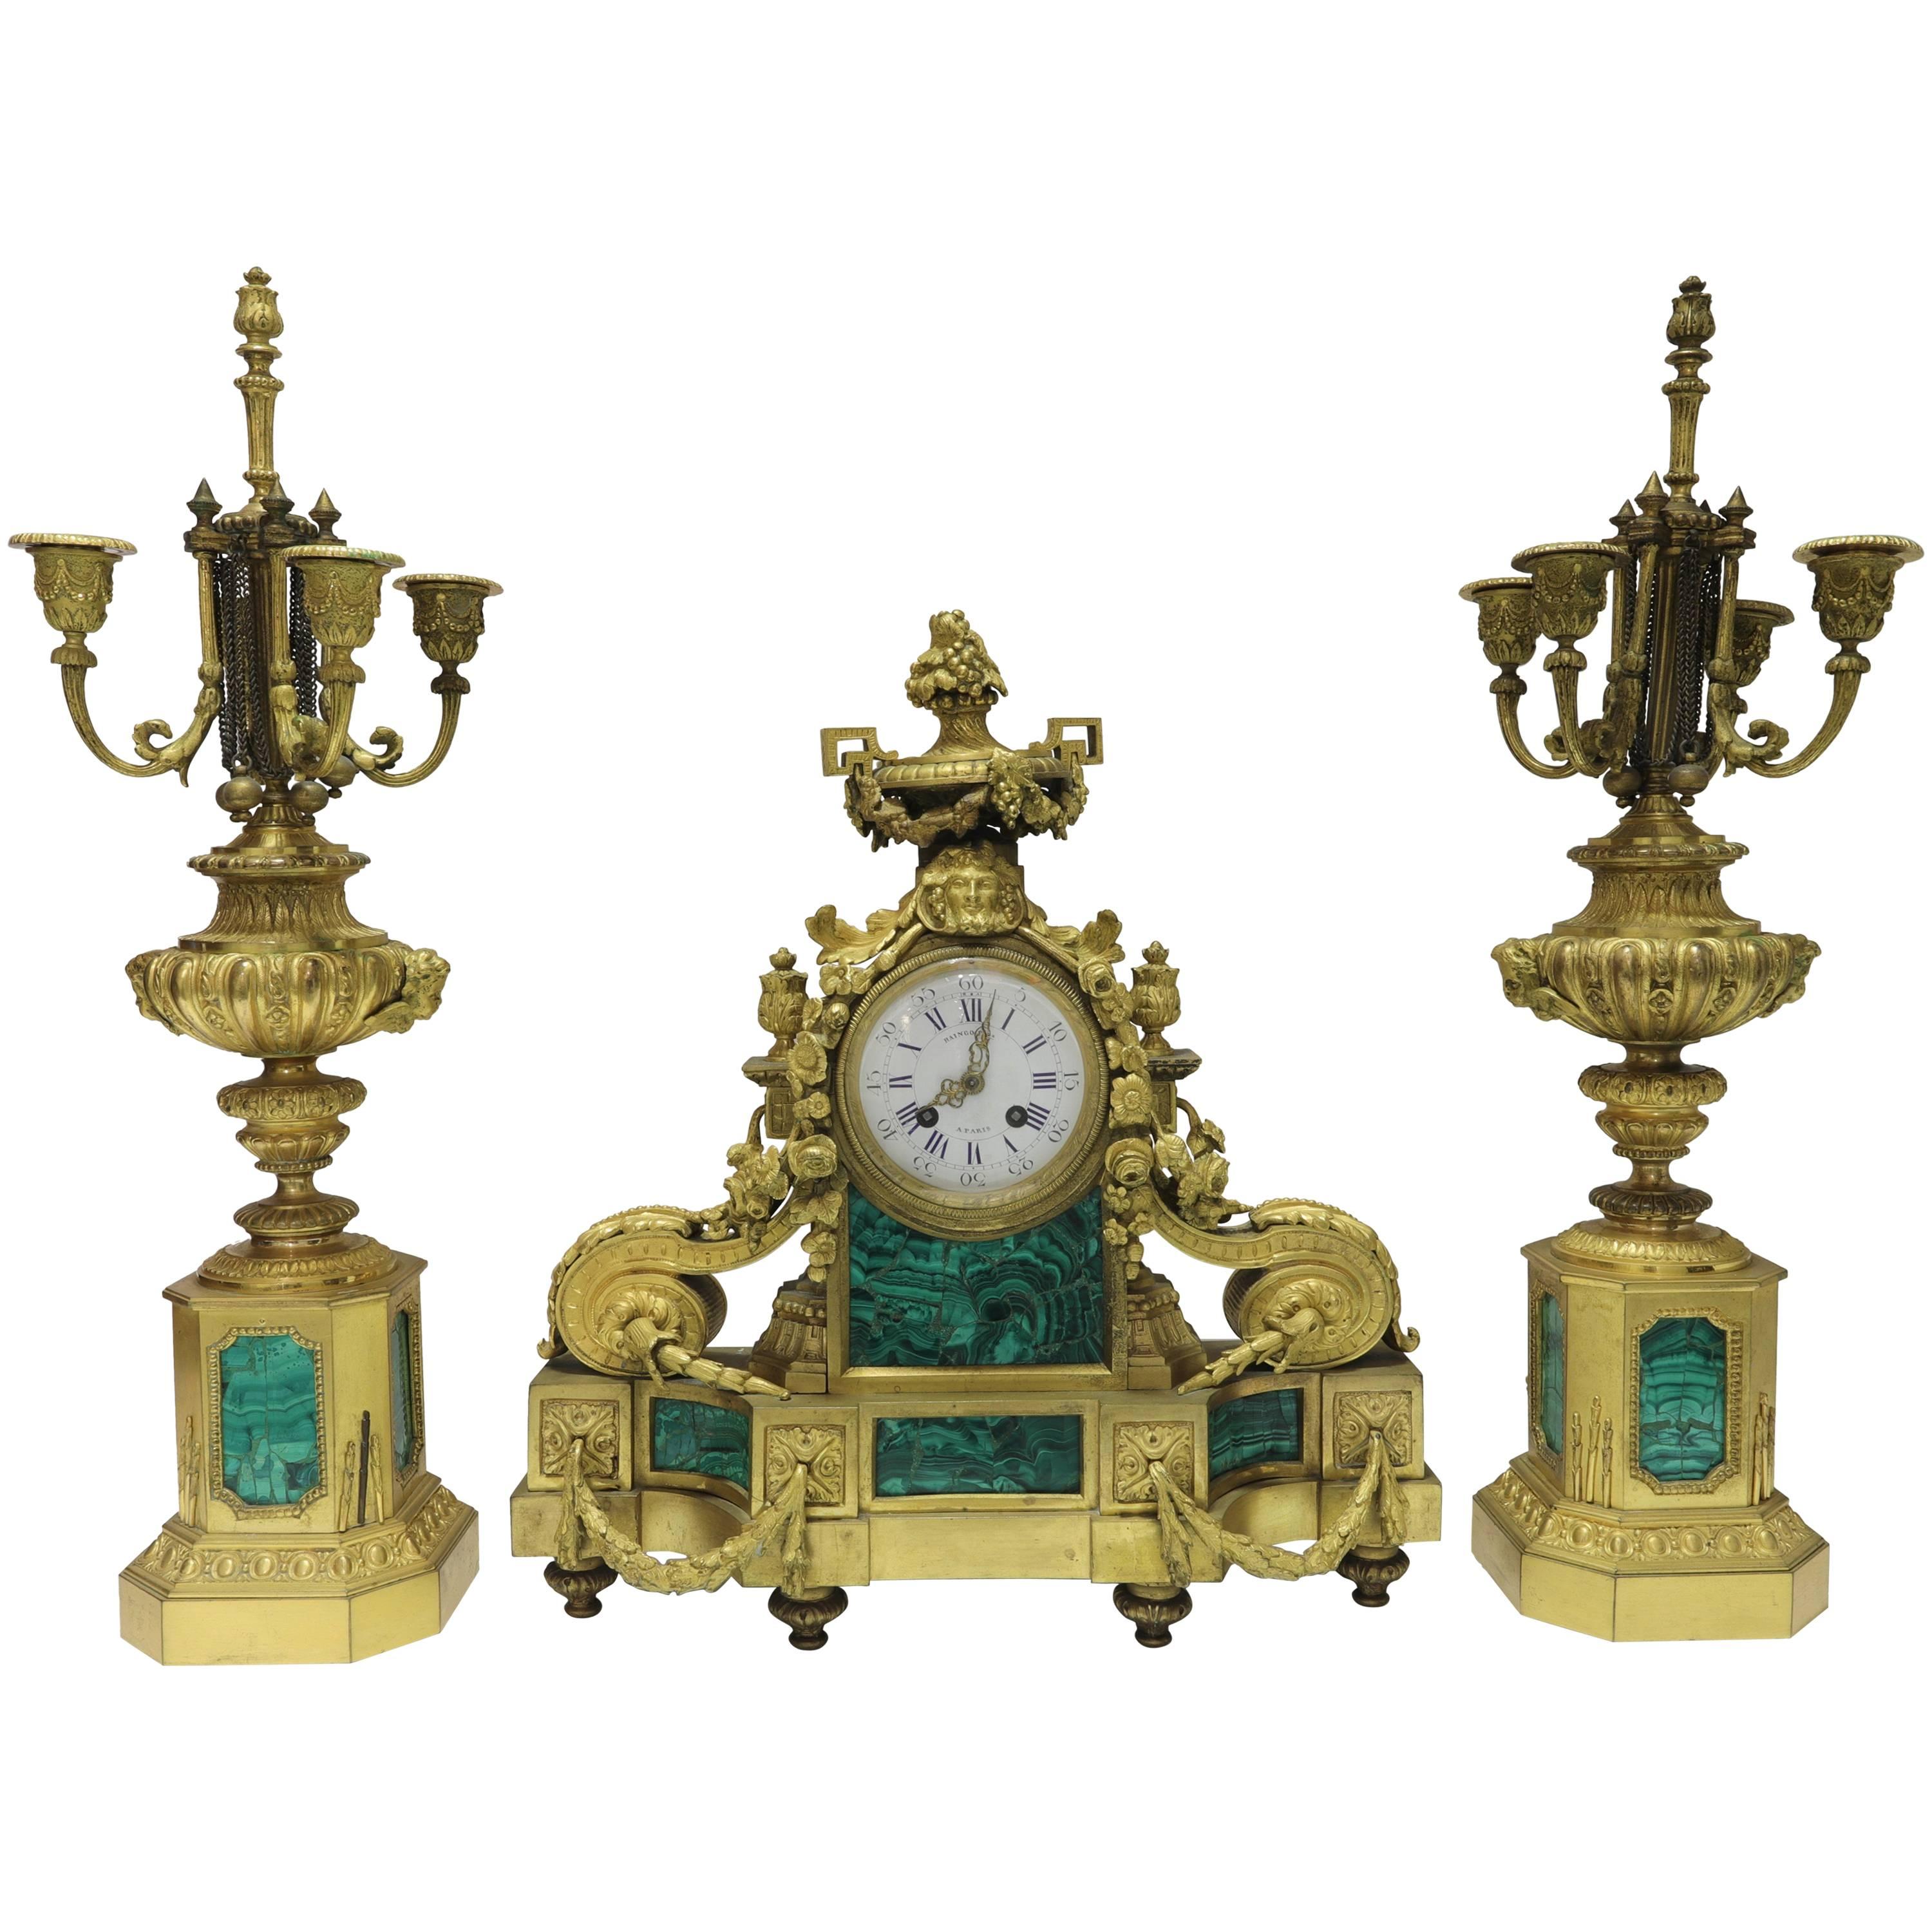 Three-Piece French Bronze and Malachite Clock Set